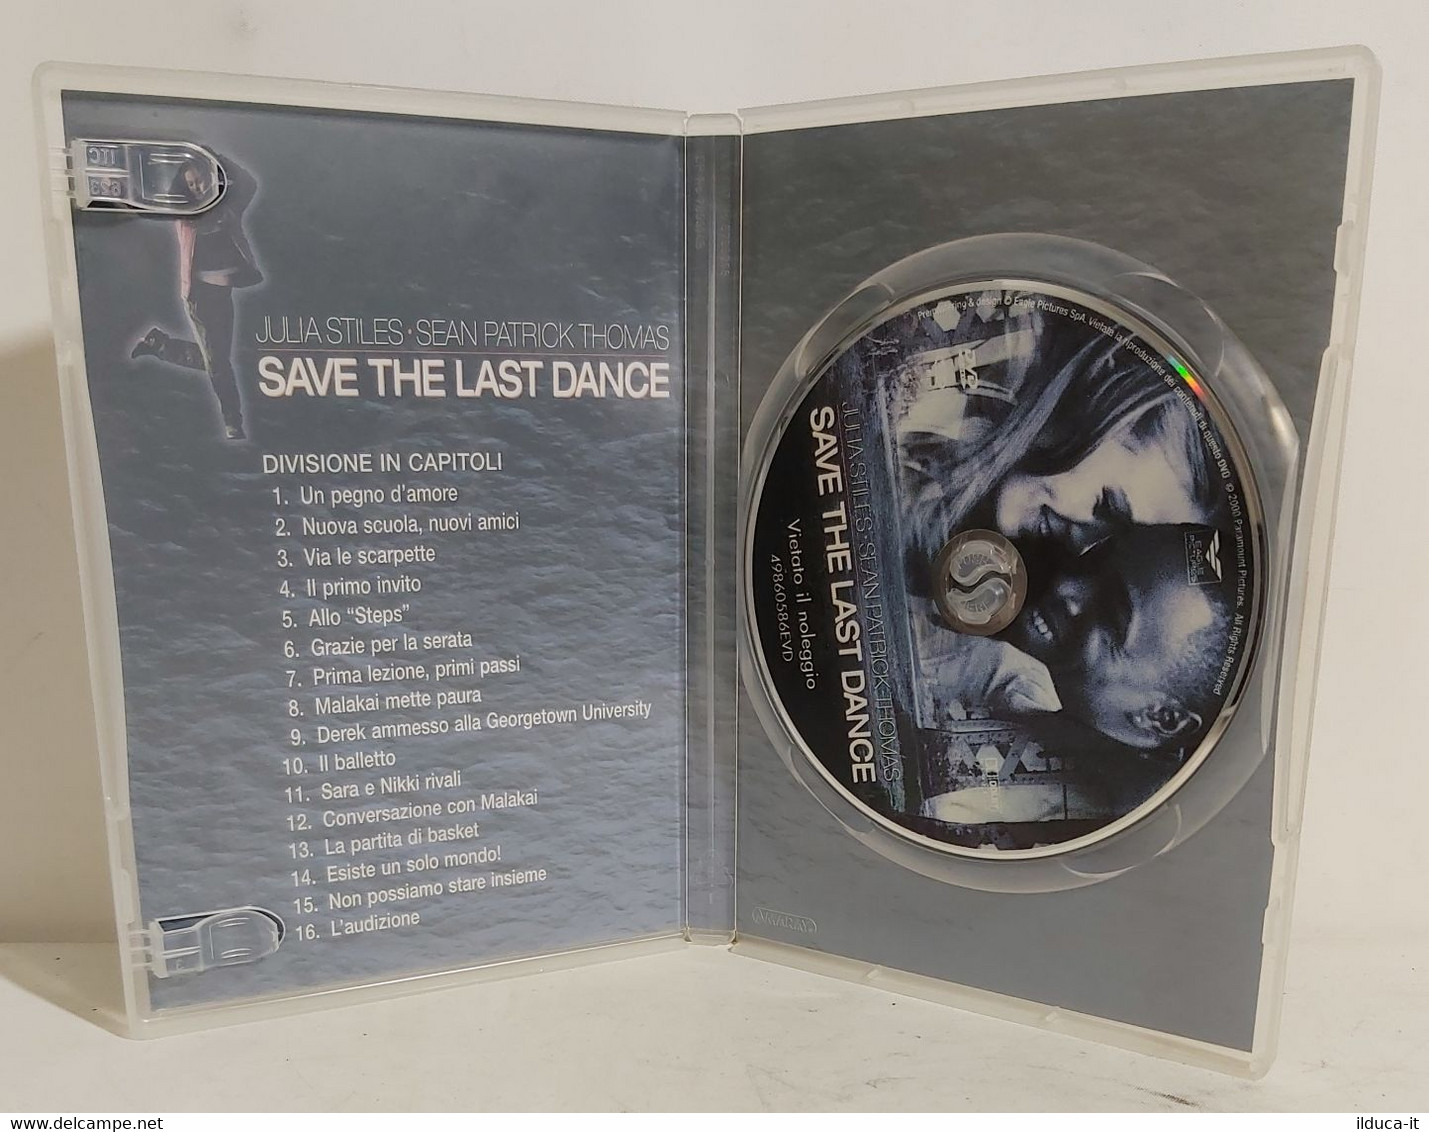 I101492 DVD - Save The Last Dance - Julia Stiles Sean Patrick Thomas - Romantici